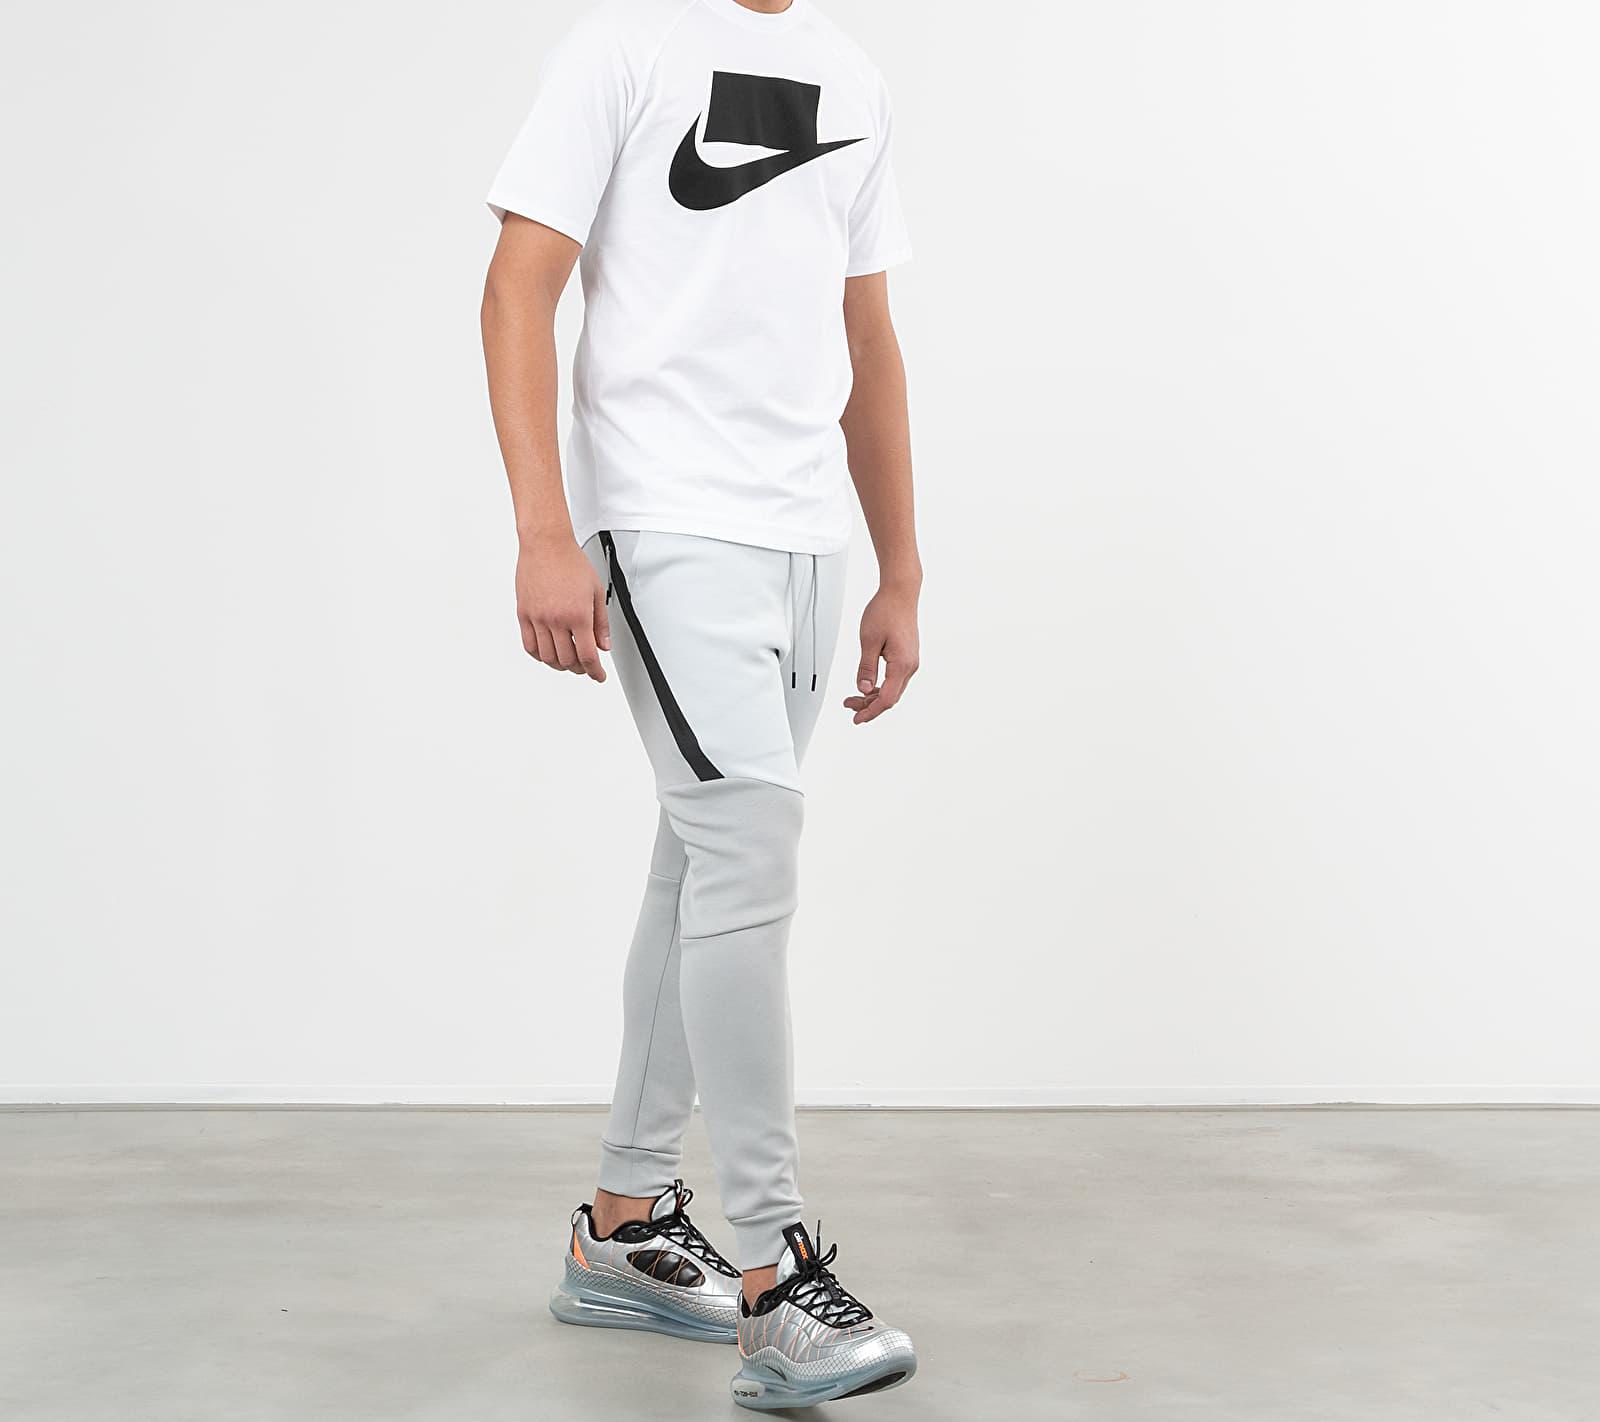 Nike Tech Fleece Pants Light Grey | escapeauthority.com